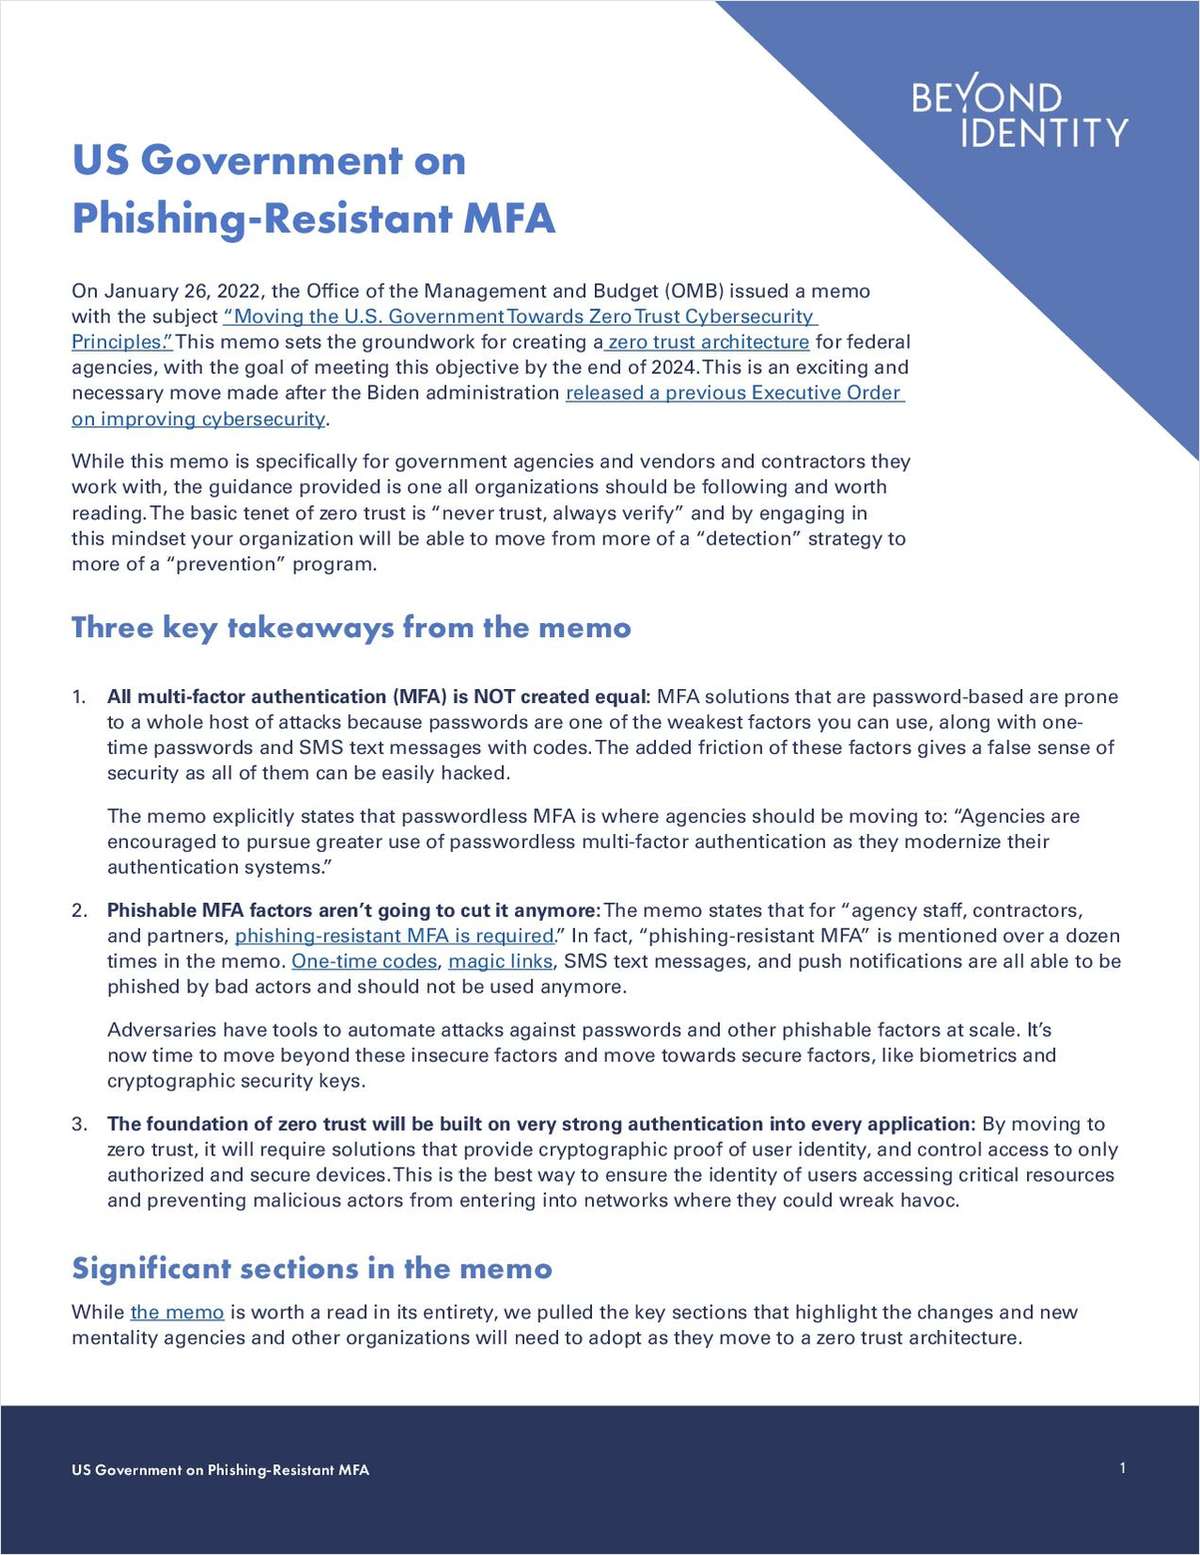 US Government on Phishing-Resistant MFA